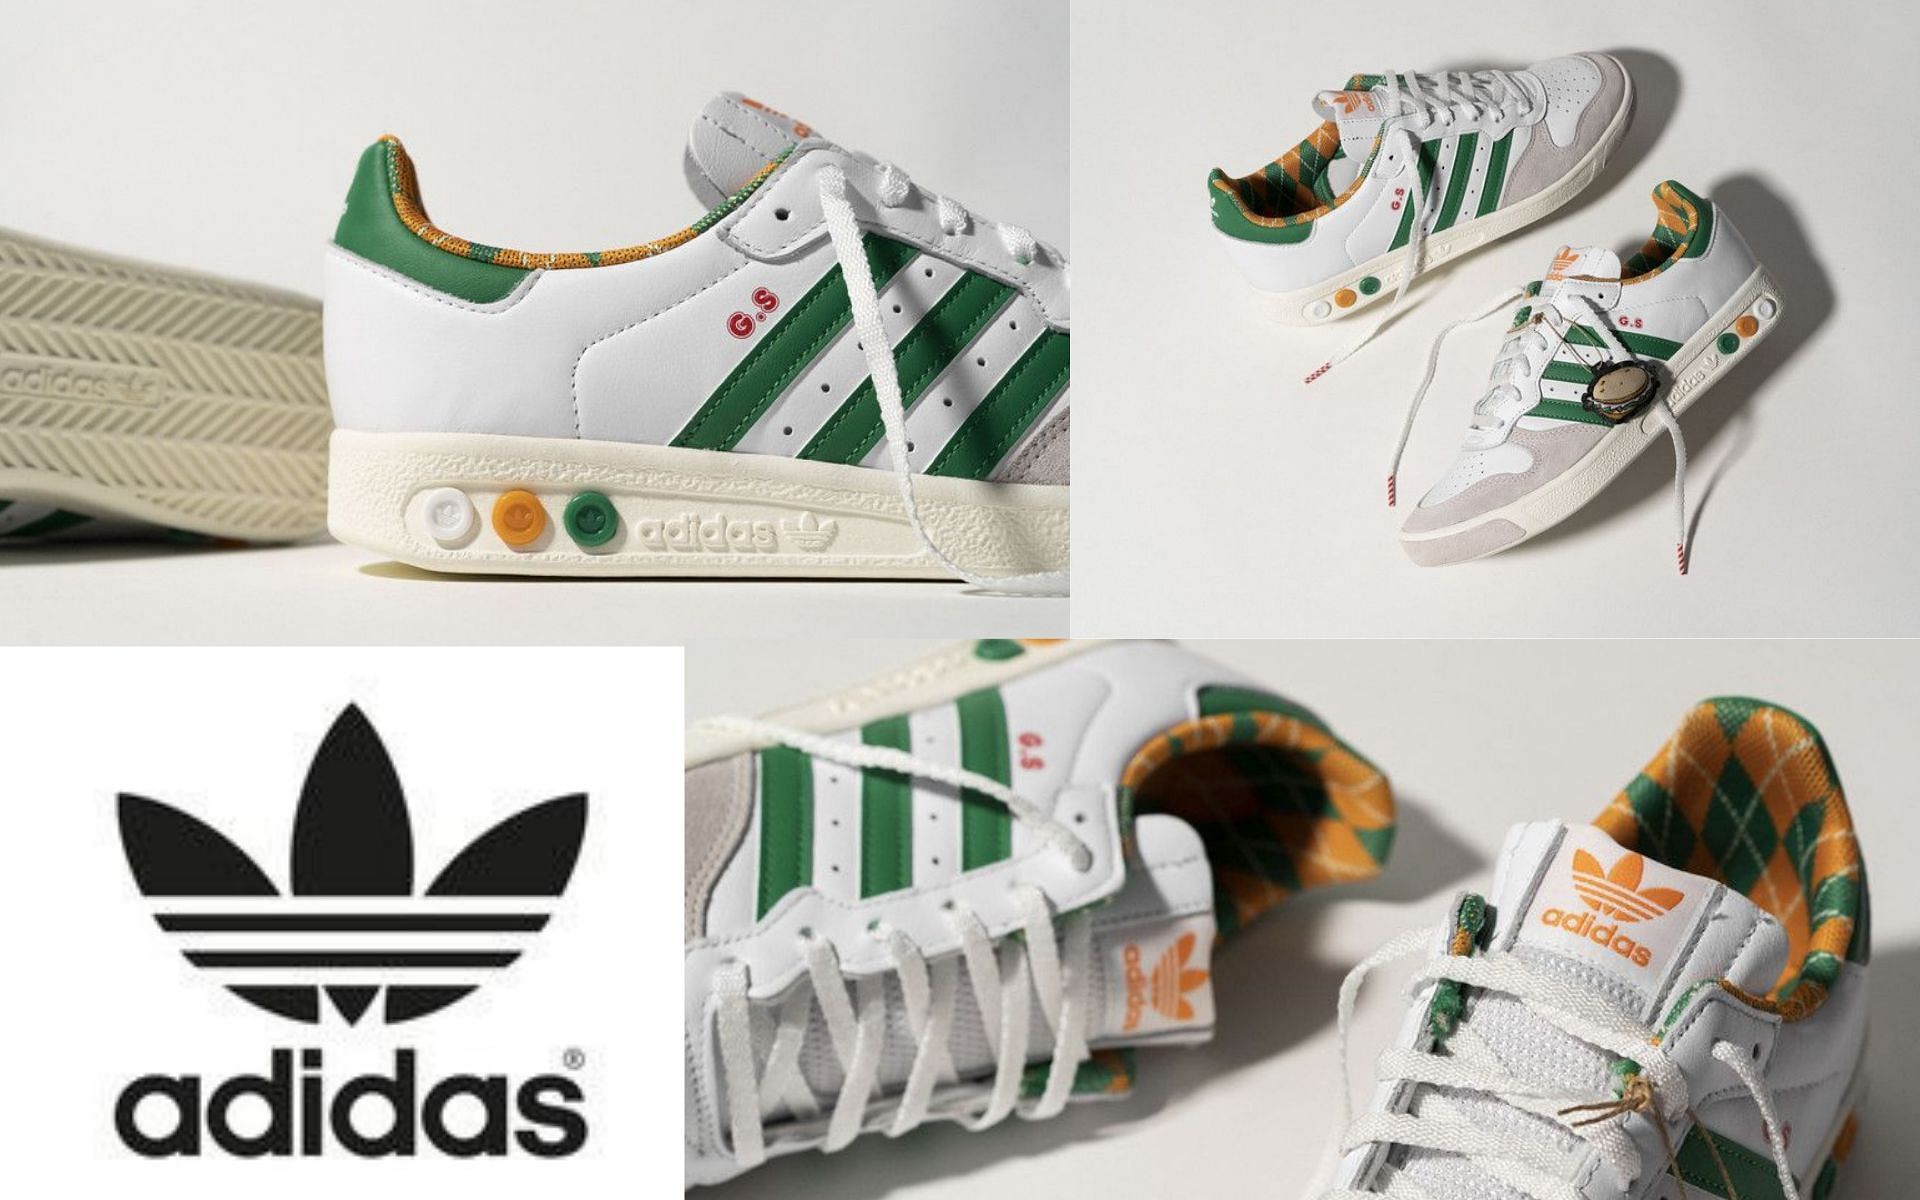 Adidas is all set to launch latest Grand Slam retro revival sneakers (Image via 43einhalb.com)